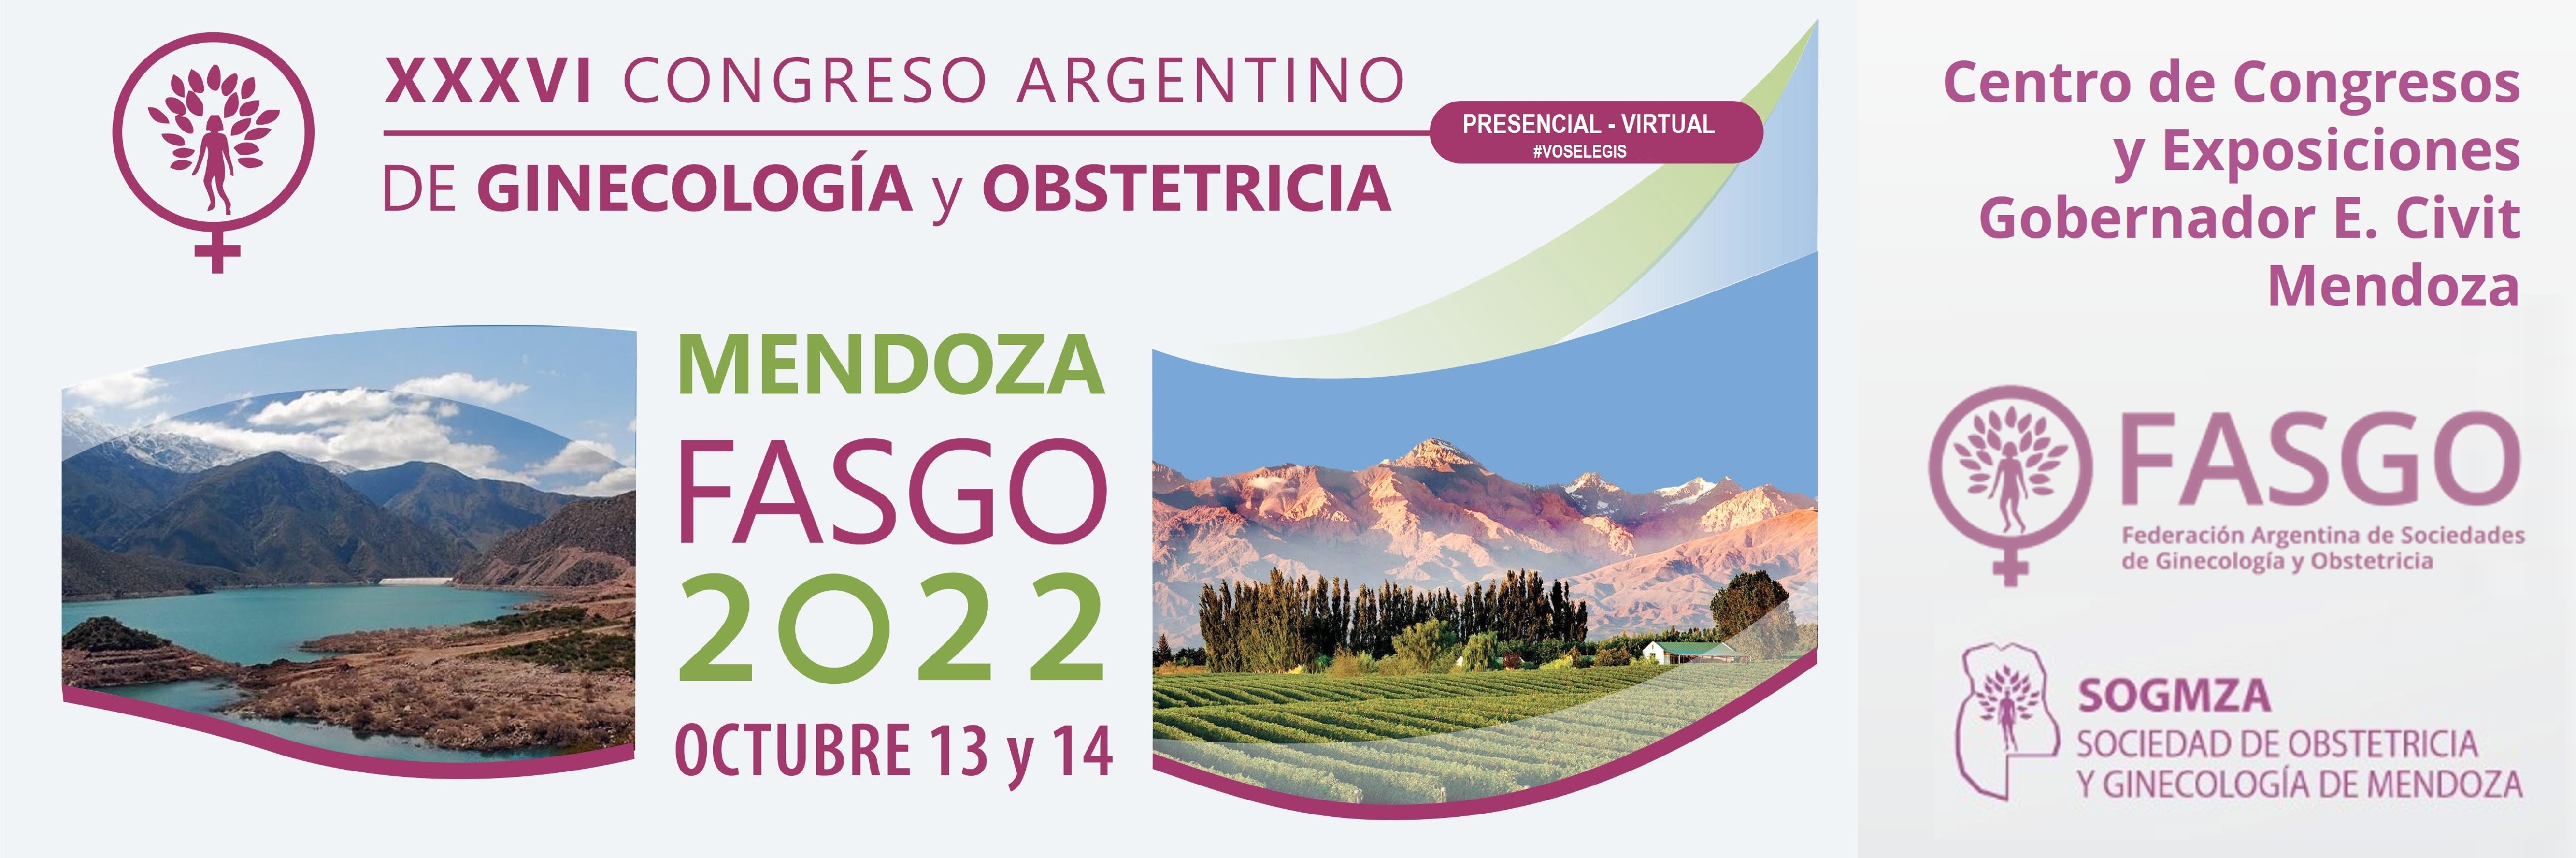 Banner Mendoza 2022-B